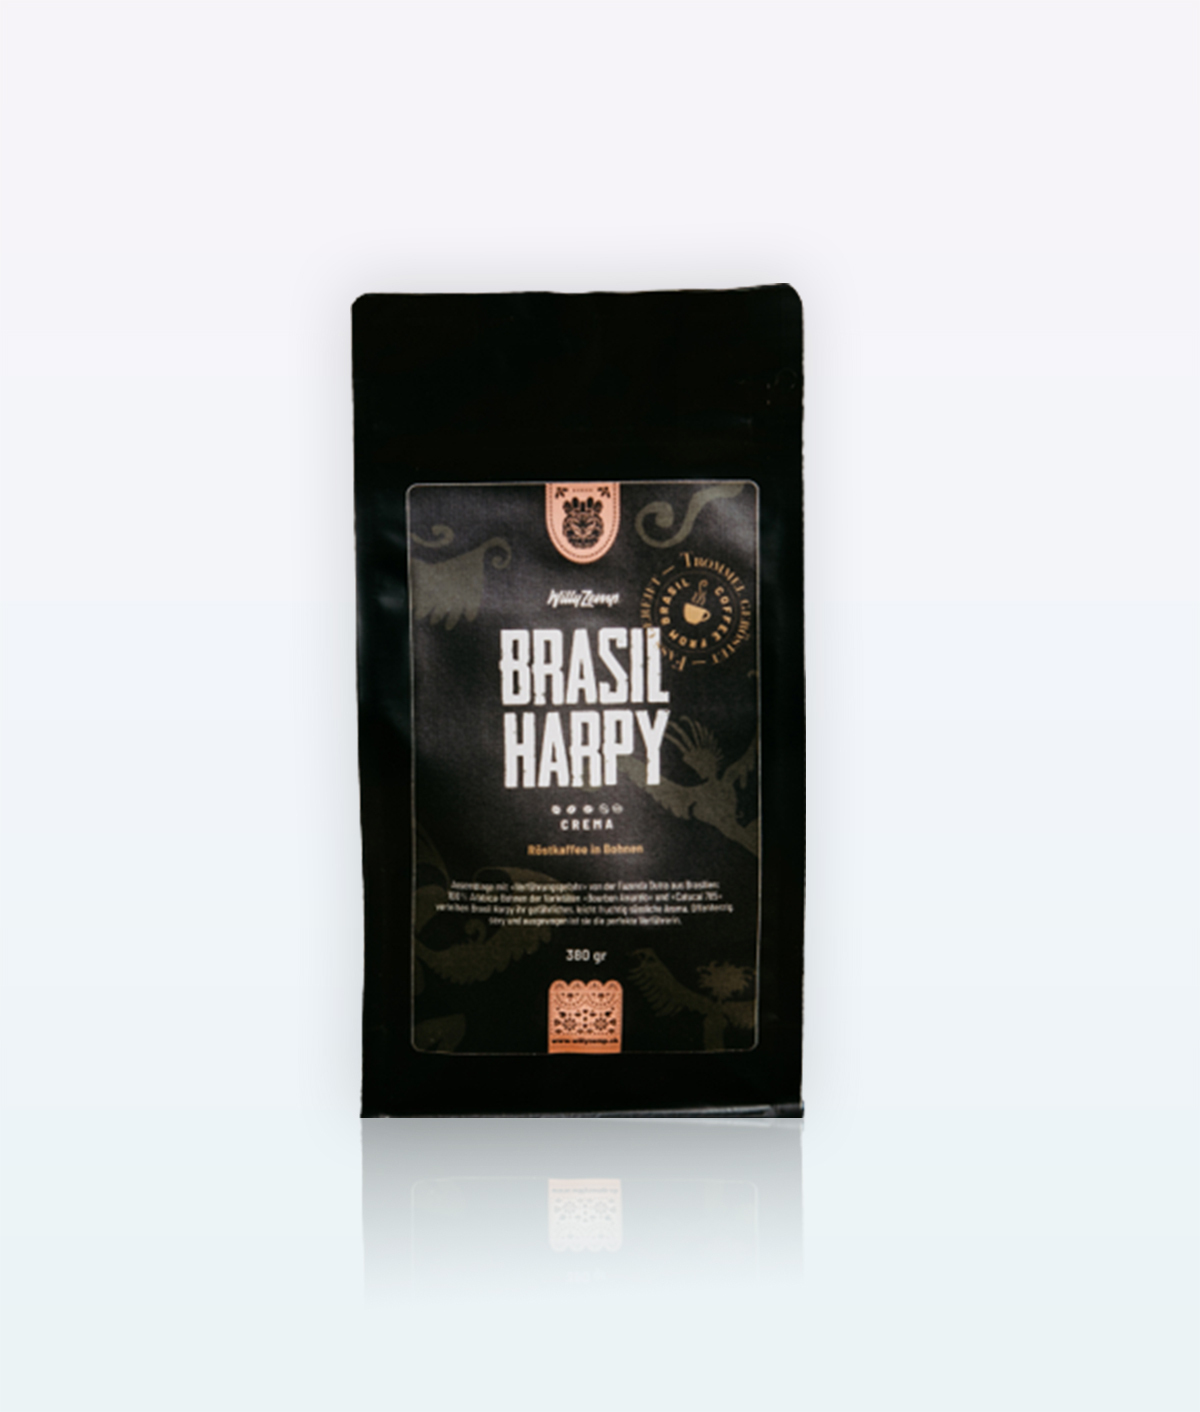 Brasil Harpy Crema Coffee Beans 380 g